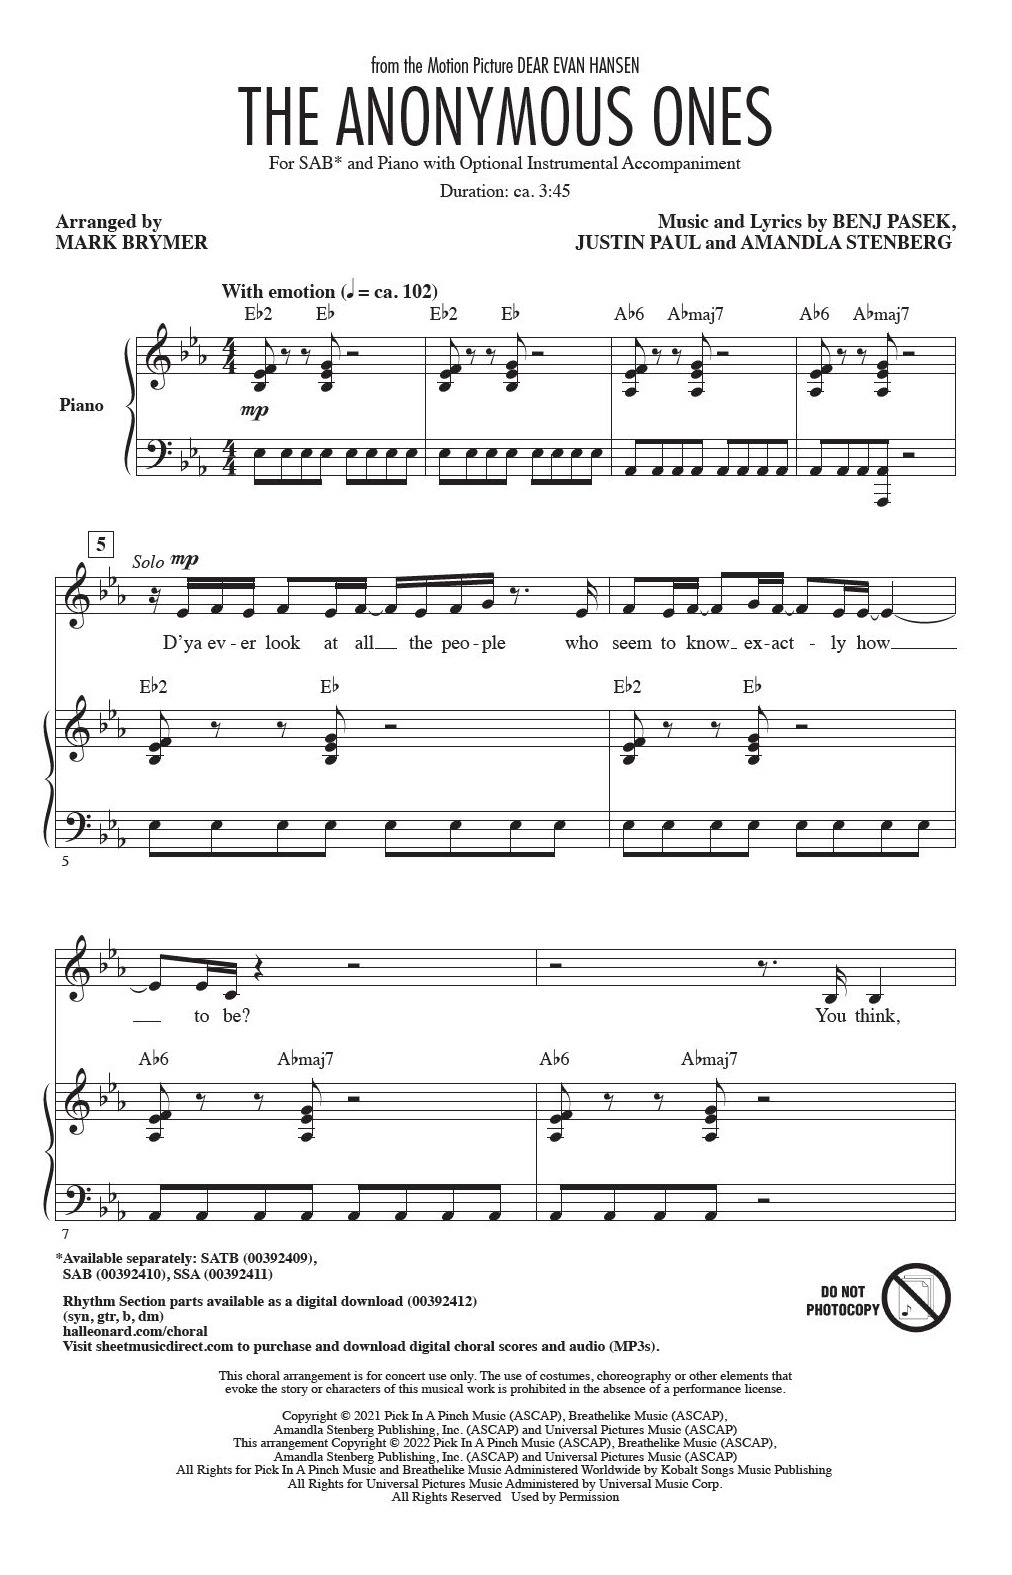 Benj Pasek, Justin Paul & Amandla Stenberg The Anonymous Ones (from Dear Evan Hansen) (arr. Mark Brymer) Sheet Music Notes & Chords for SATB Choir - Download or Print PDF